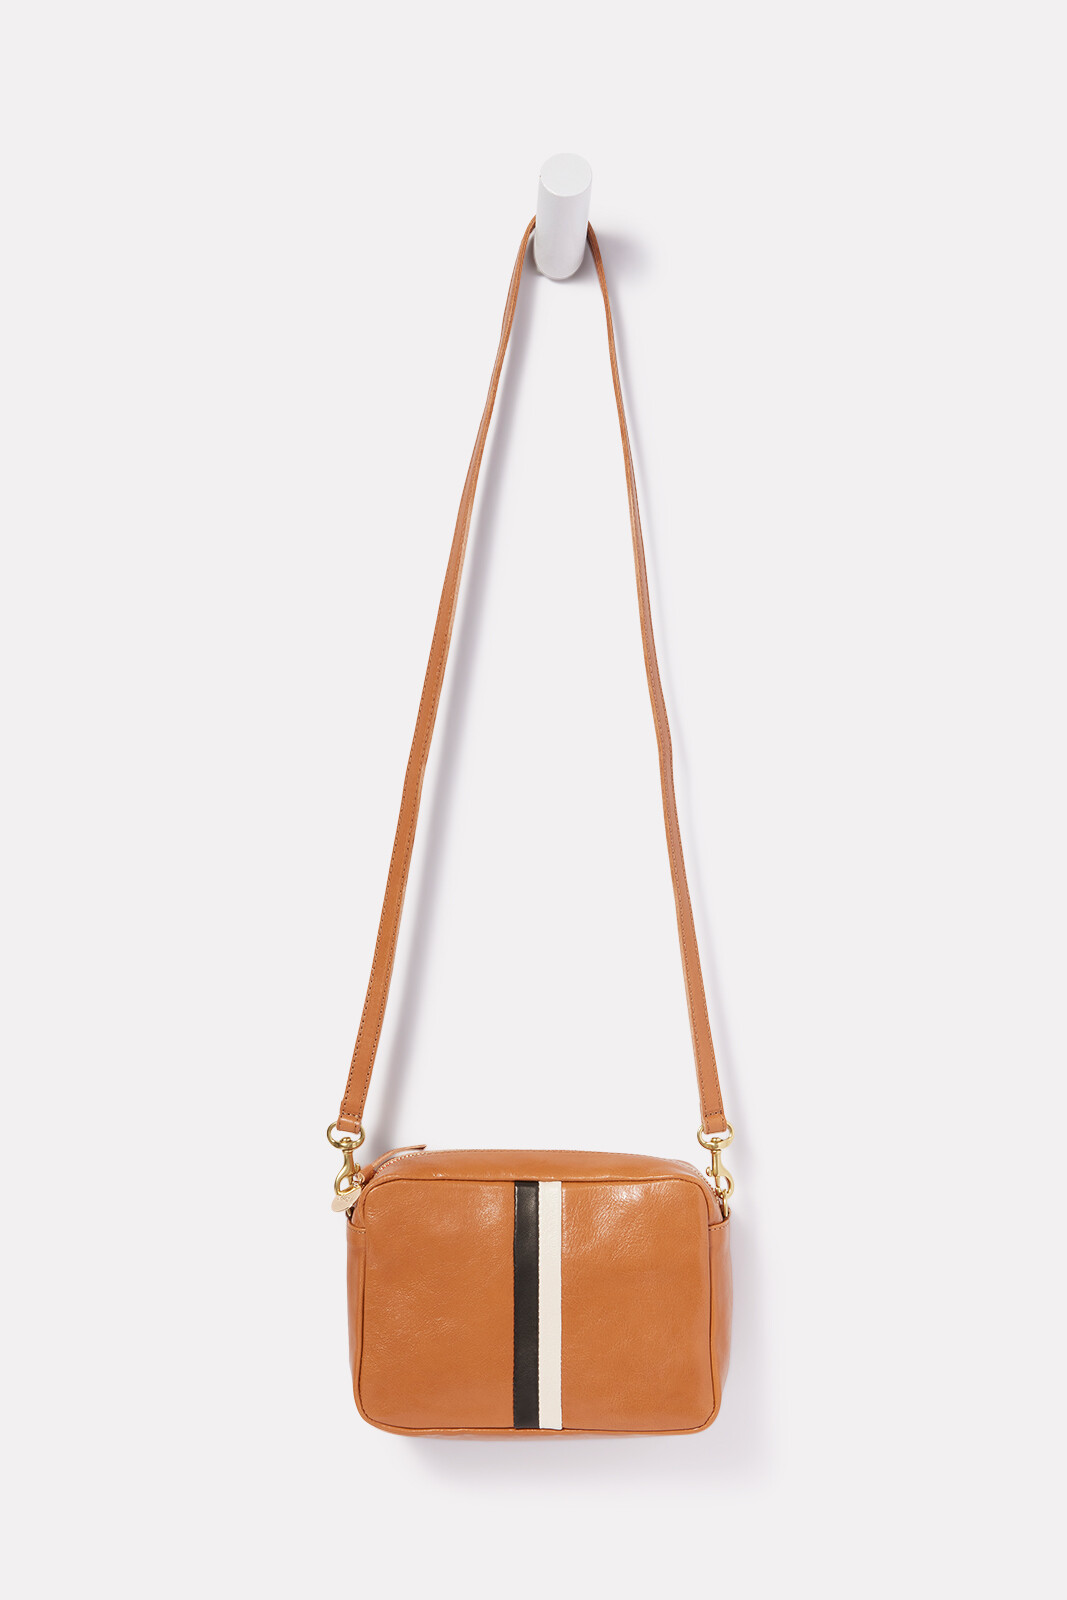 $345 Clare V. Los Angeles Midi Sac Stripe Perforated Leather Crossbody Bag  Black